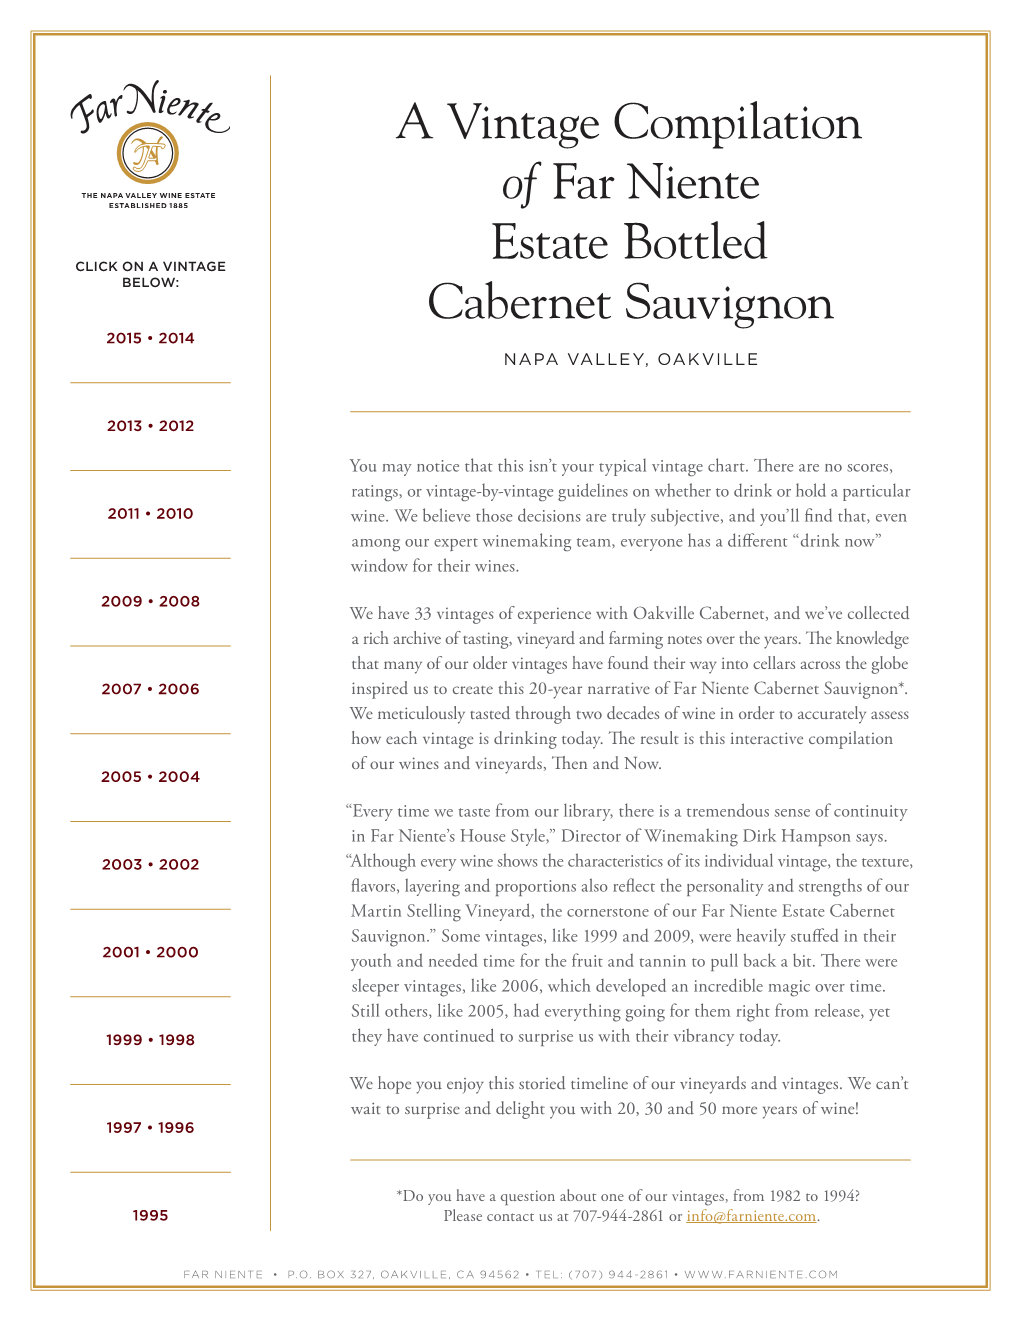 A Vintage Compilation of Far Niente Estate Bottled Cabernet Sauvignon